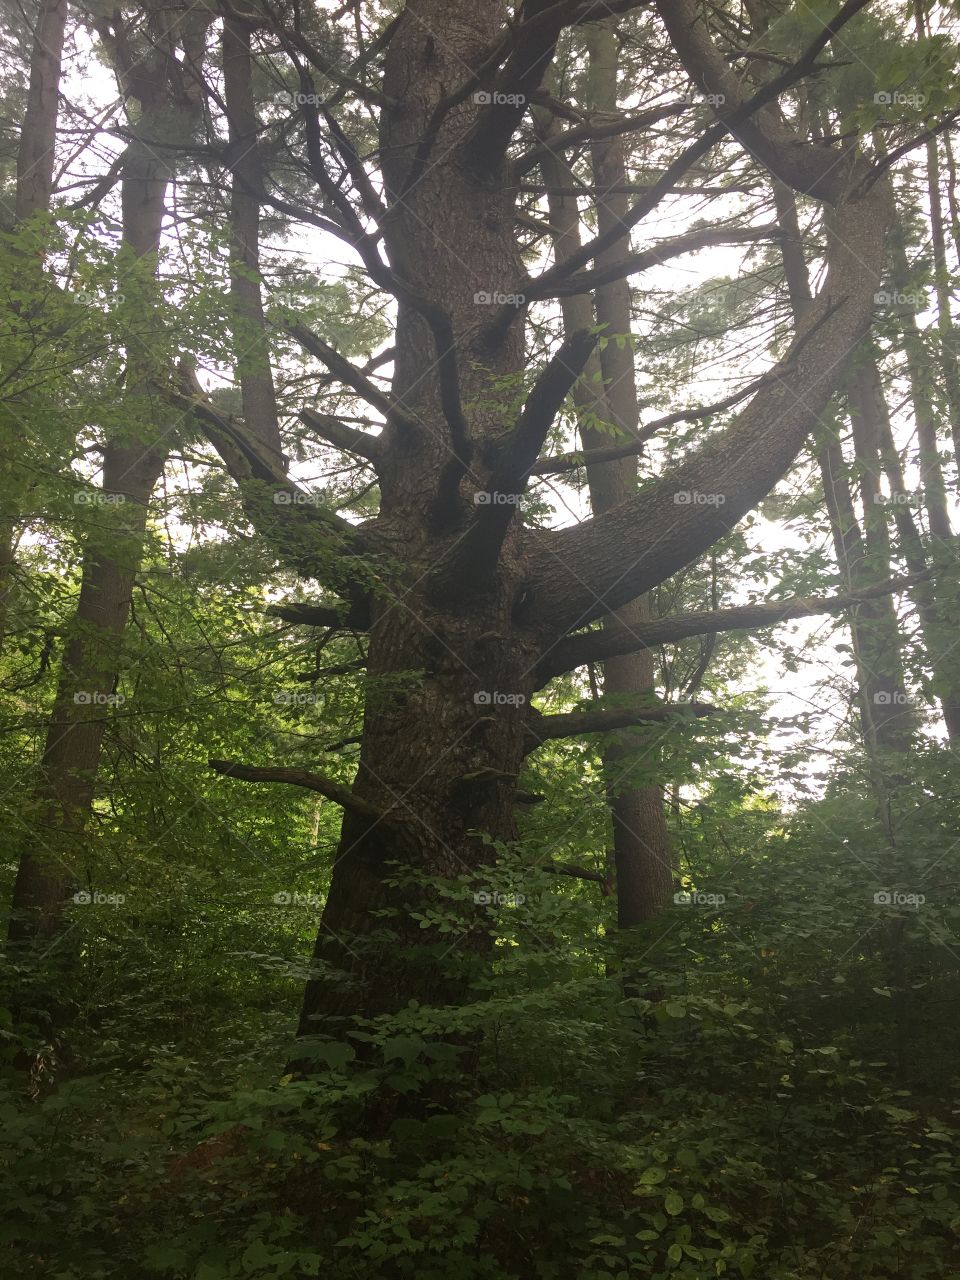 Crooked tree 